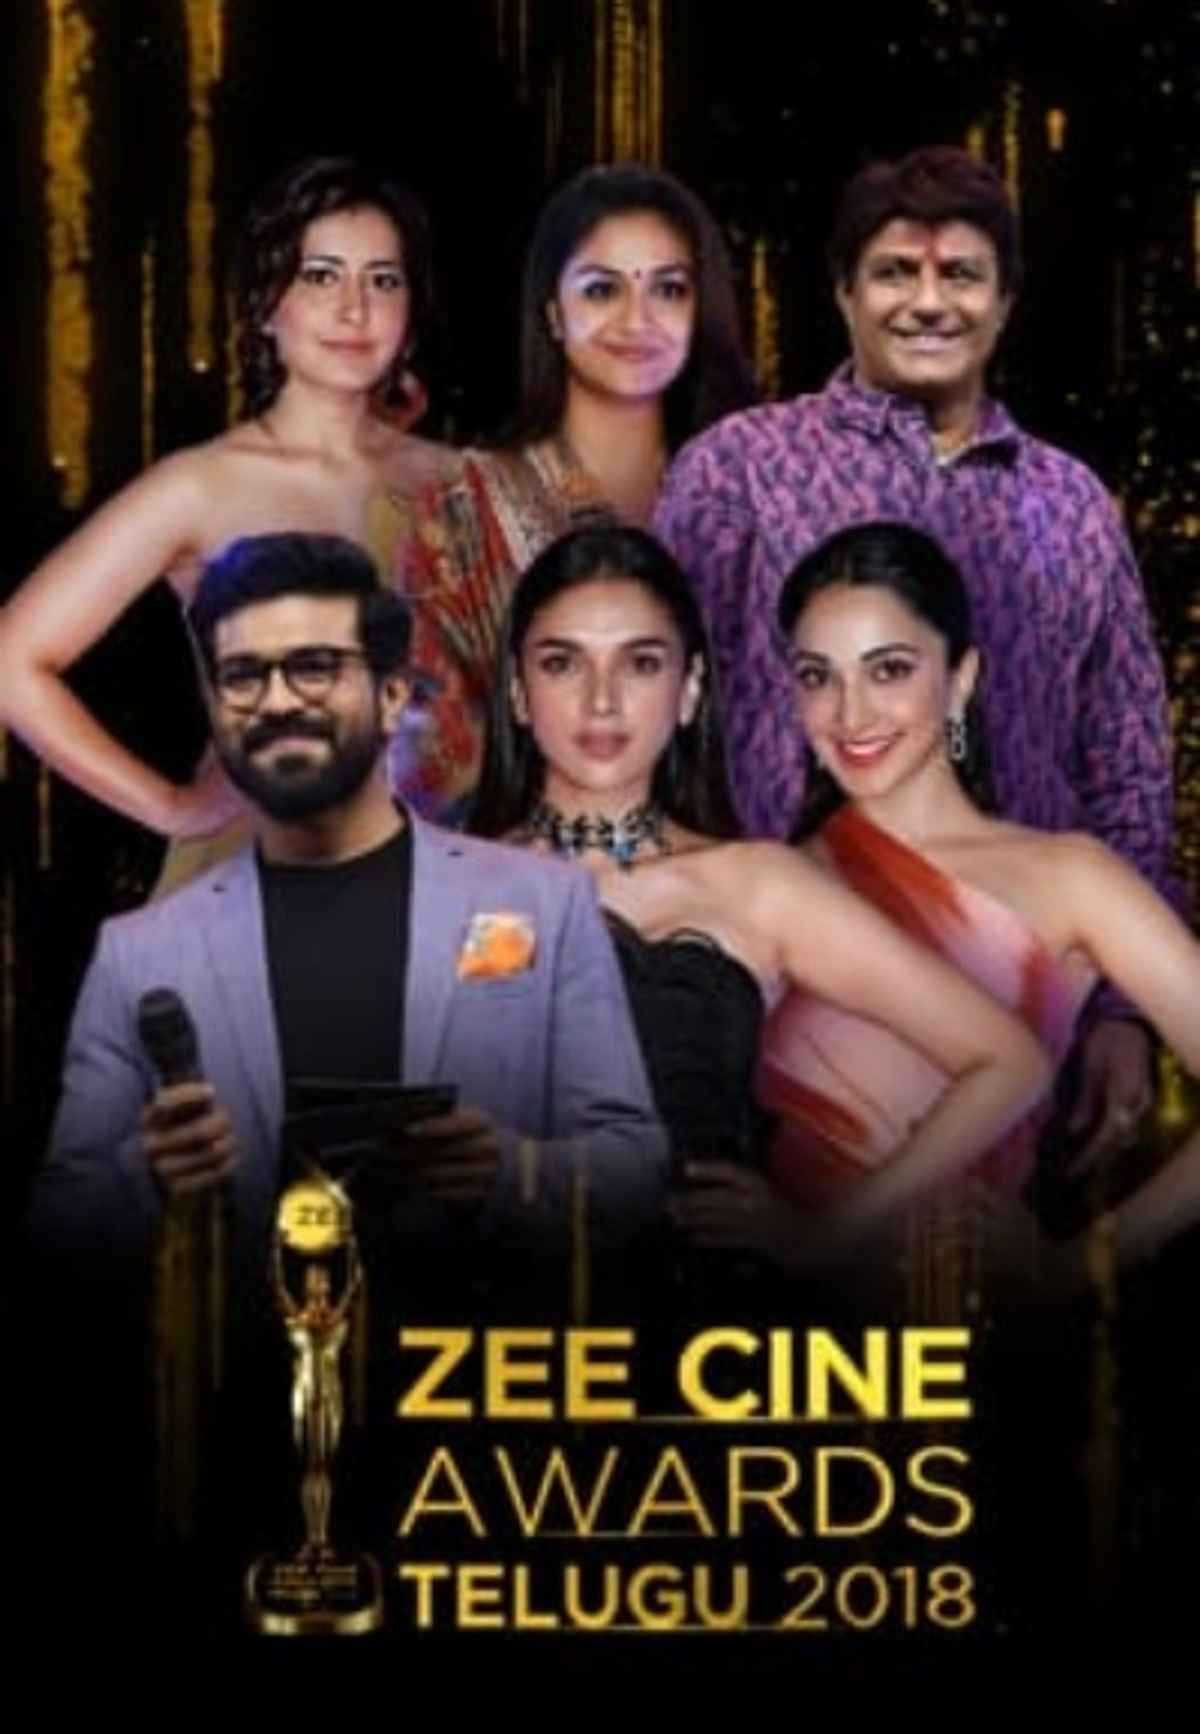 Watch Zee Cine Awards Telugu 2018 Online, All Seasons or Episodes